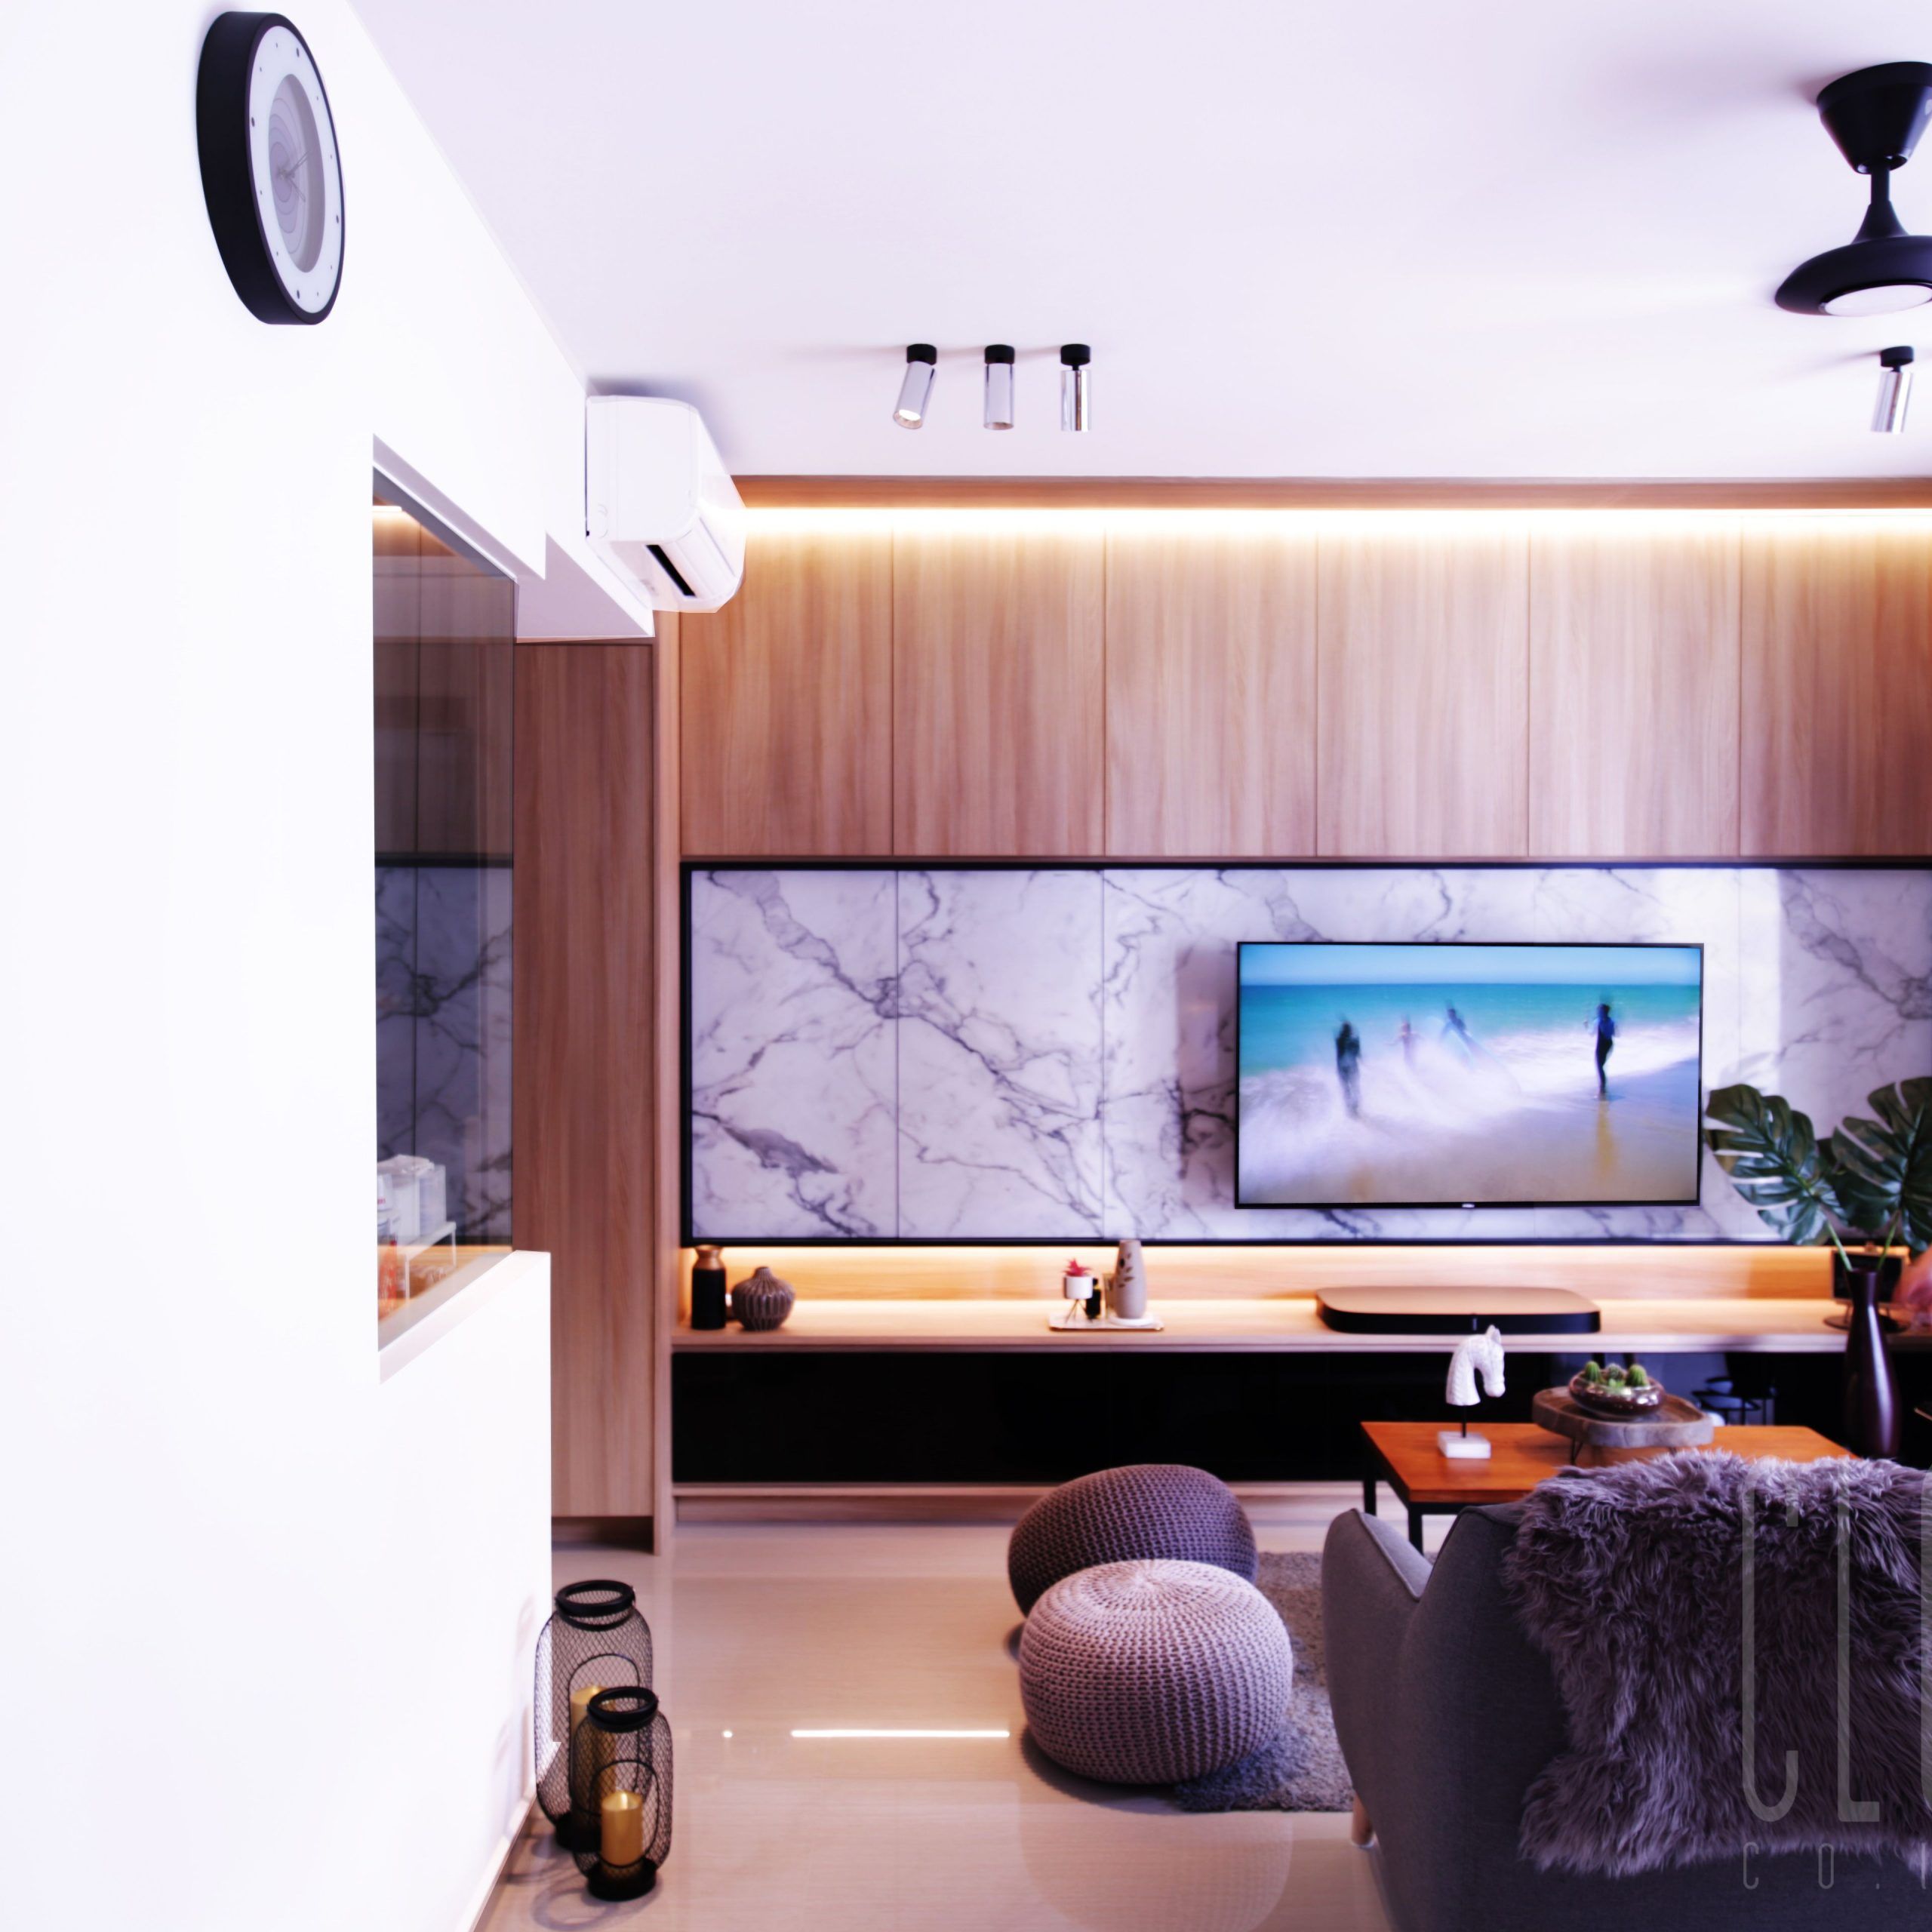 Tv Cabinet In 2020 | Scandinavian Living, Tv Cabinets, Design With Regard To Scandinavian Design Tv Cabinets (View 11 of 15)